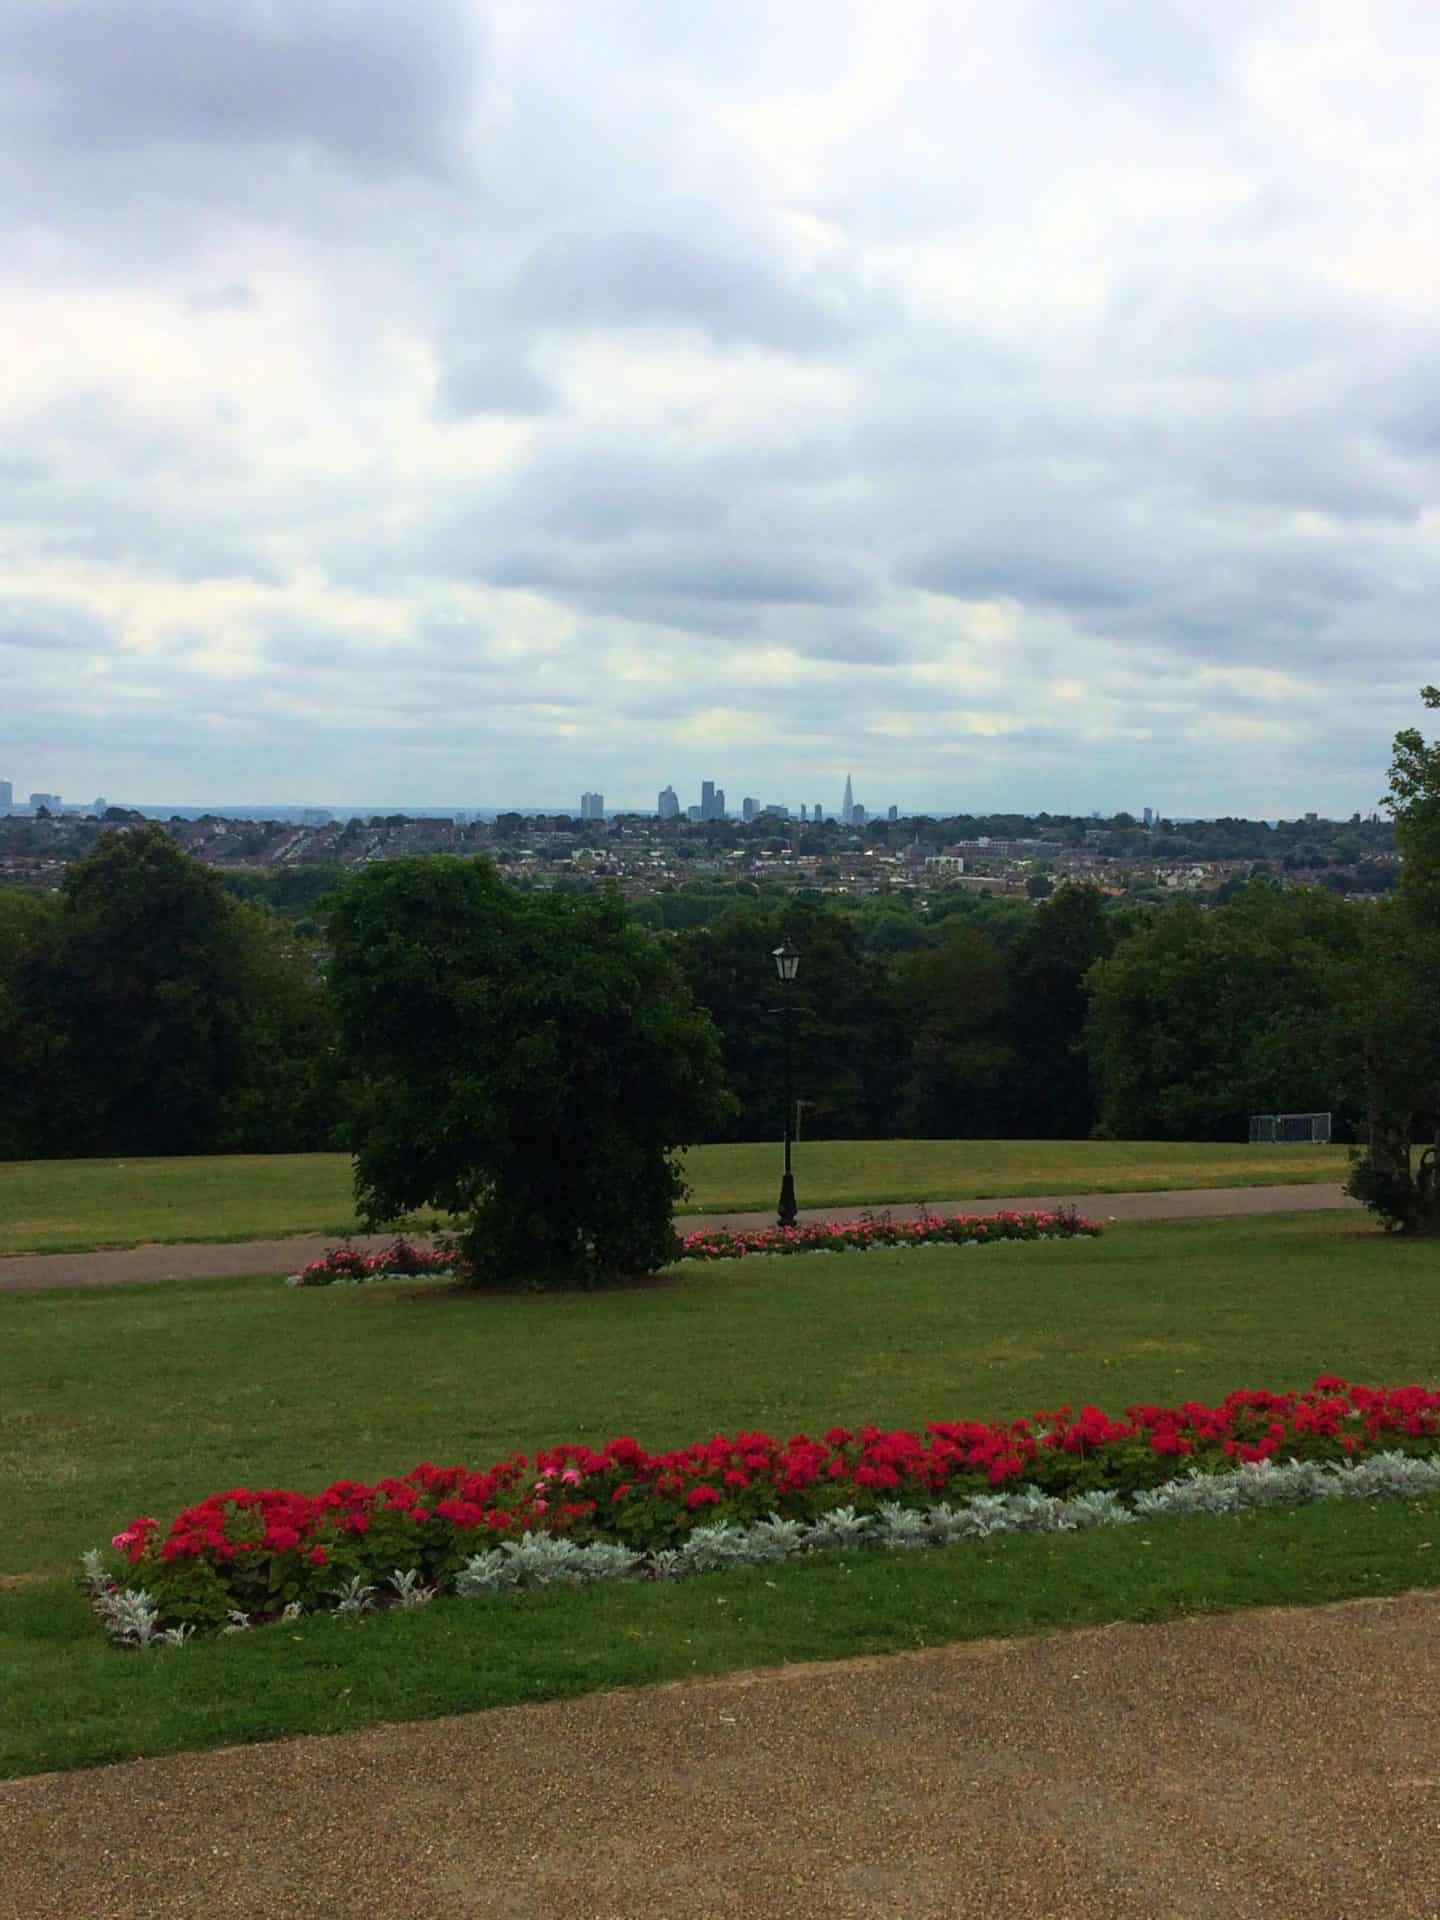 Picnic Spots in London, a city view alexandra palace